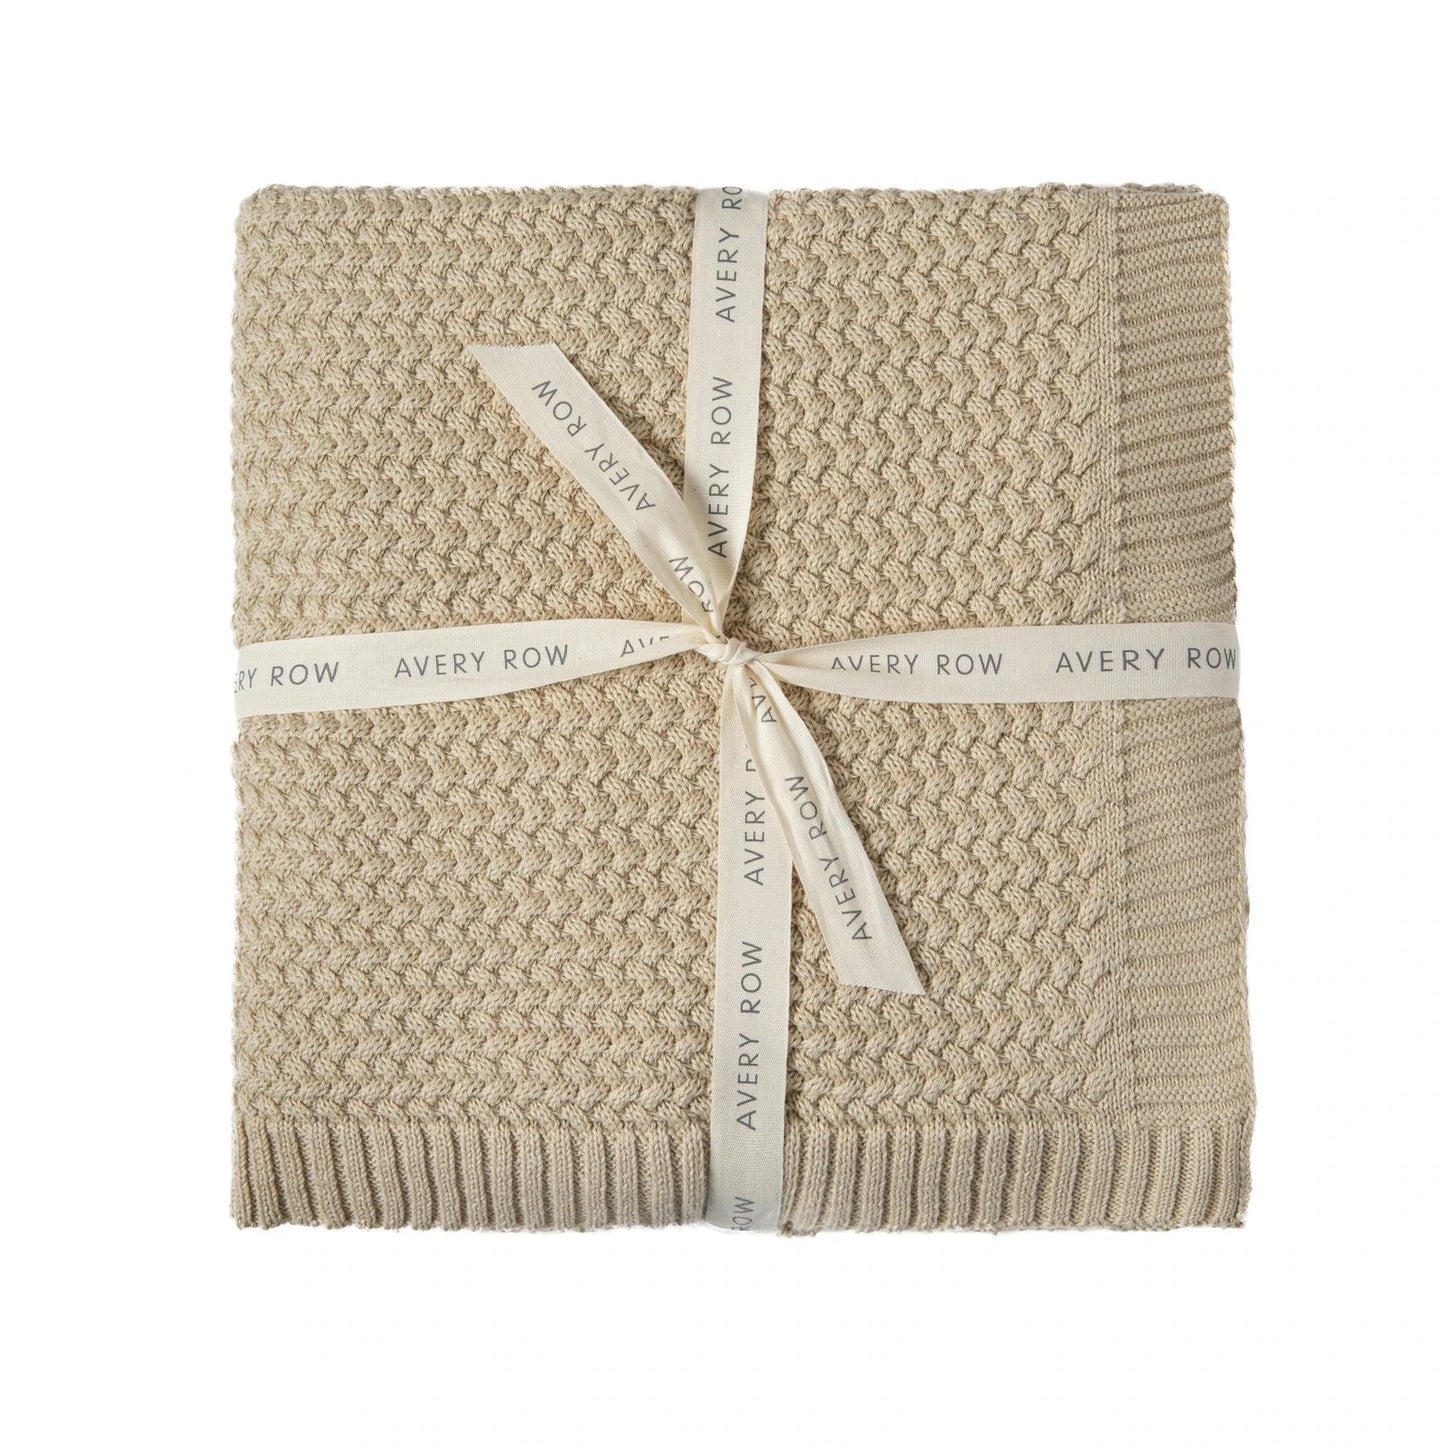 Avery Row Organic Plait Knit Baby Blanket - Oat